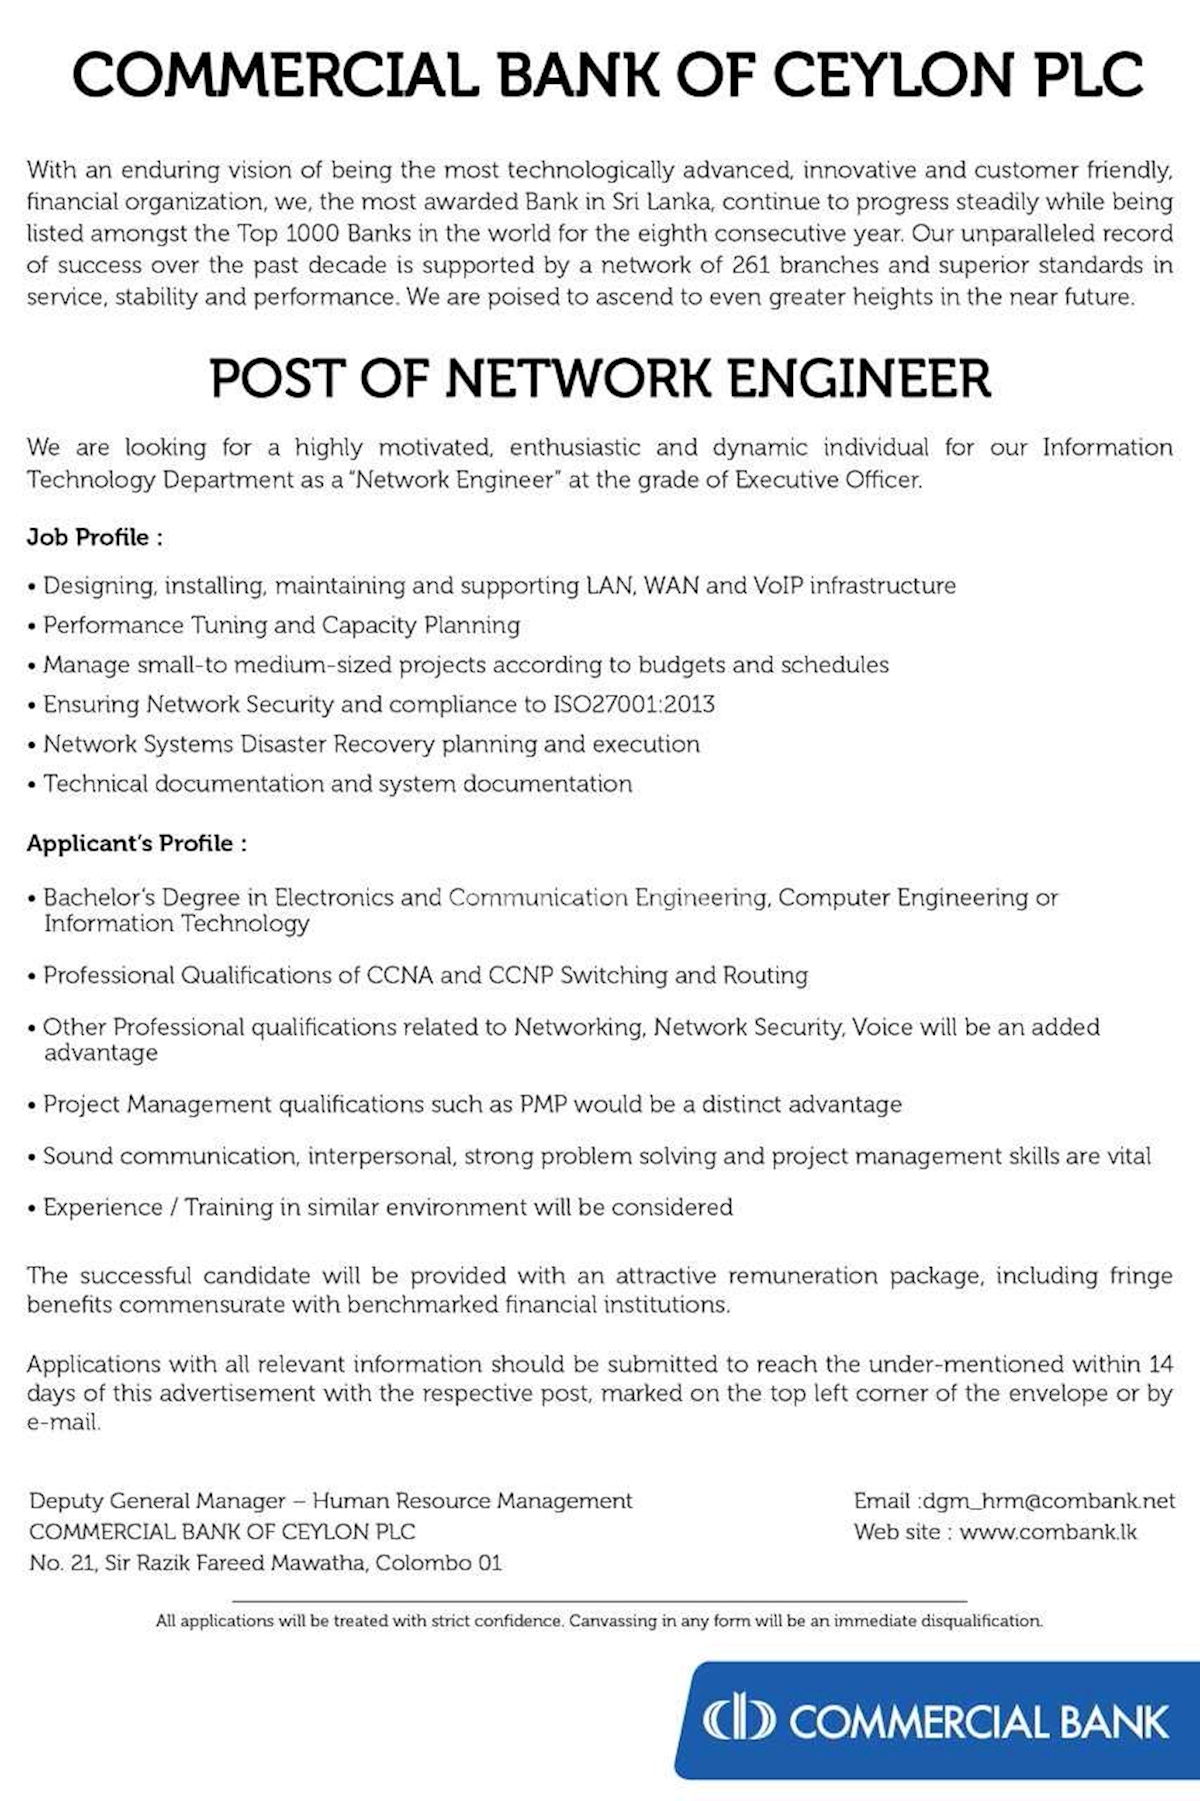 Post of Network Engineer